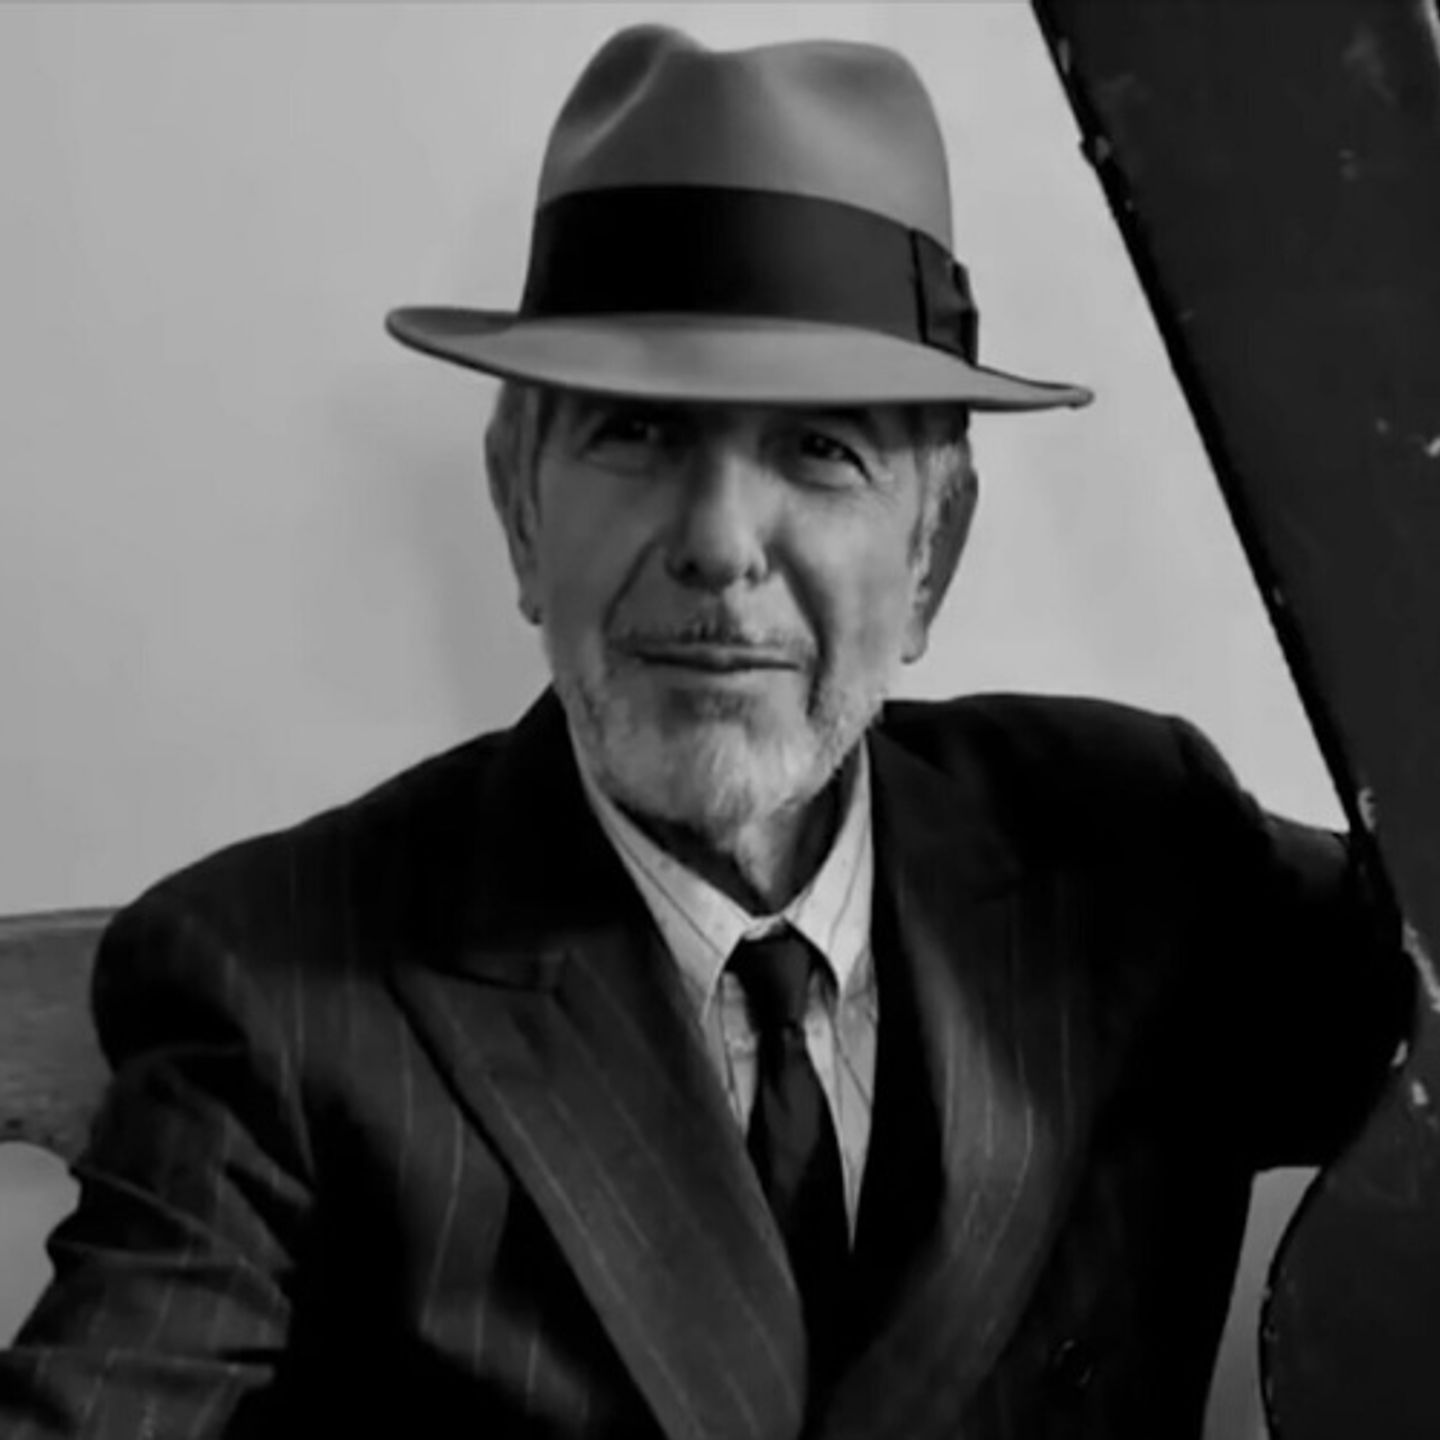 Leonard Cohen in a suit holding a gun